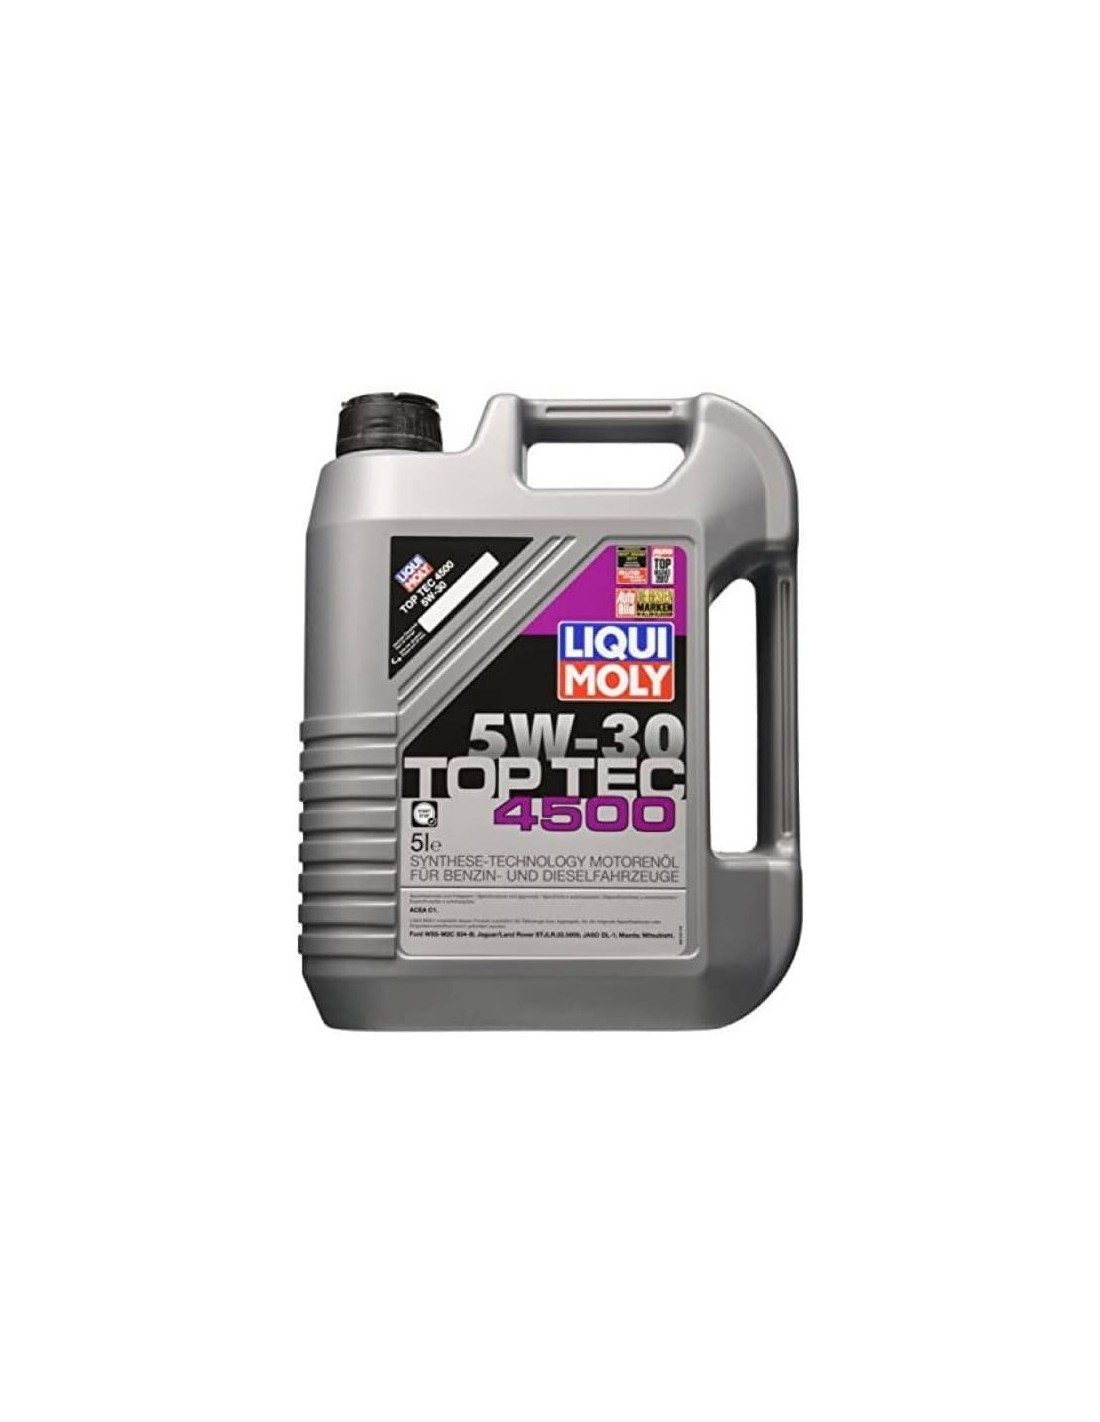 Aceite Liqui Moly Top Tec 4500 5W30 5 L - 47,90€ -   Capacidad 5 Litros